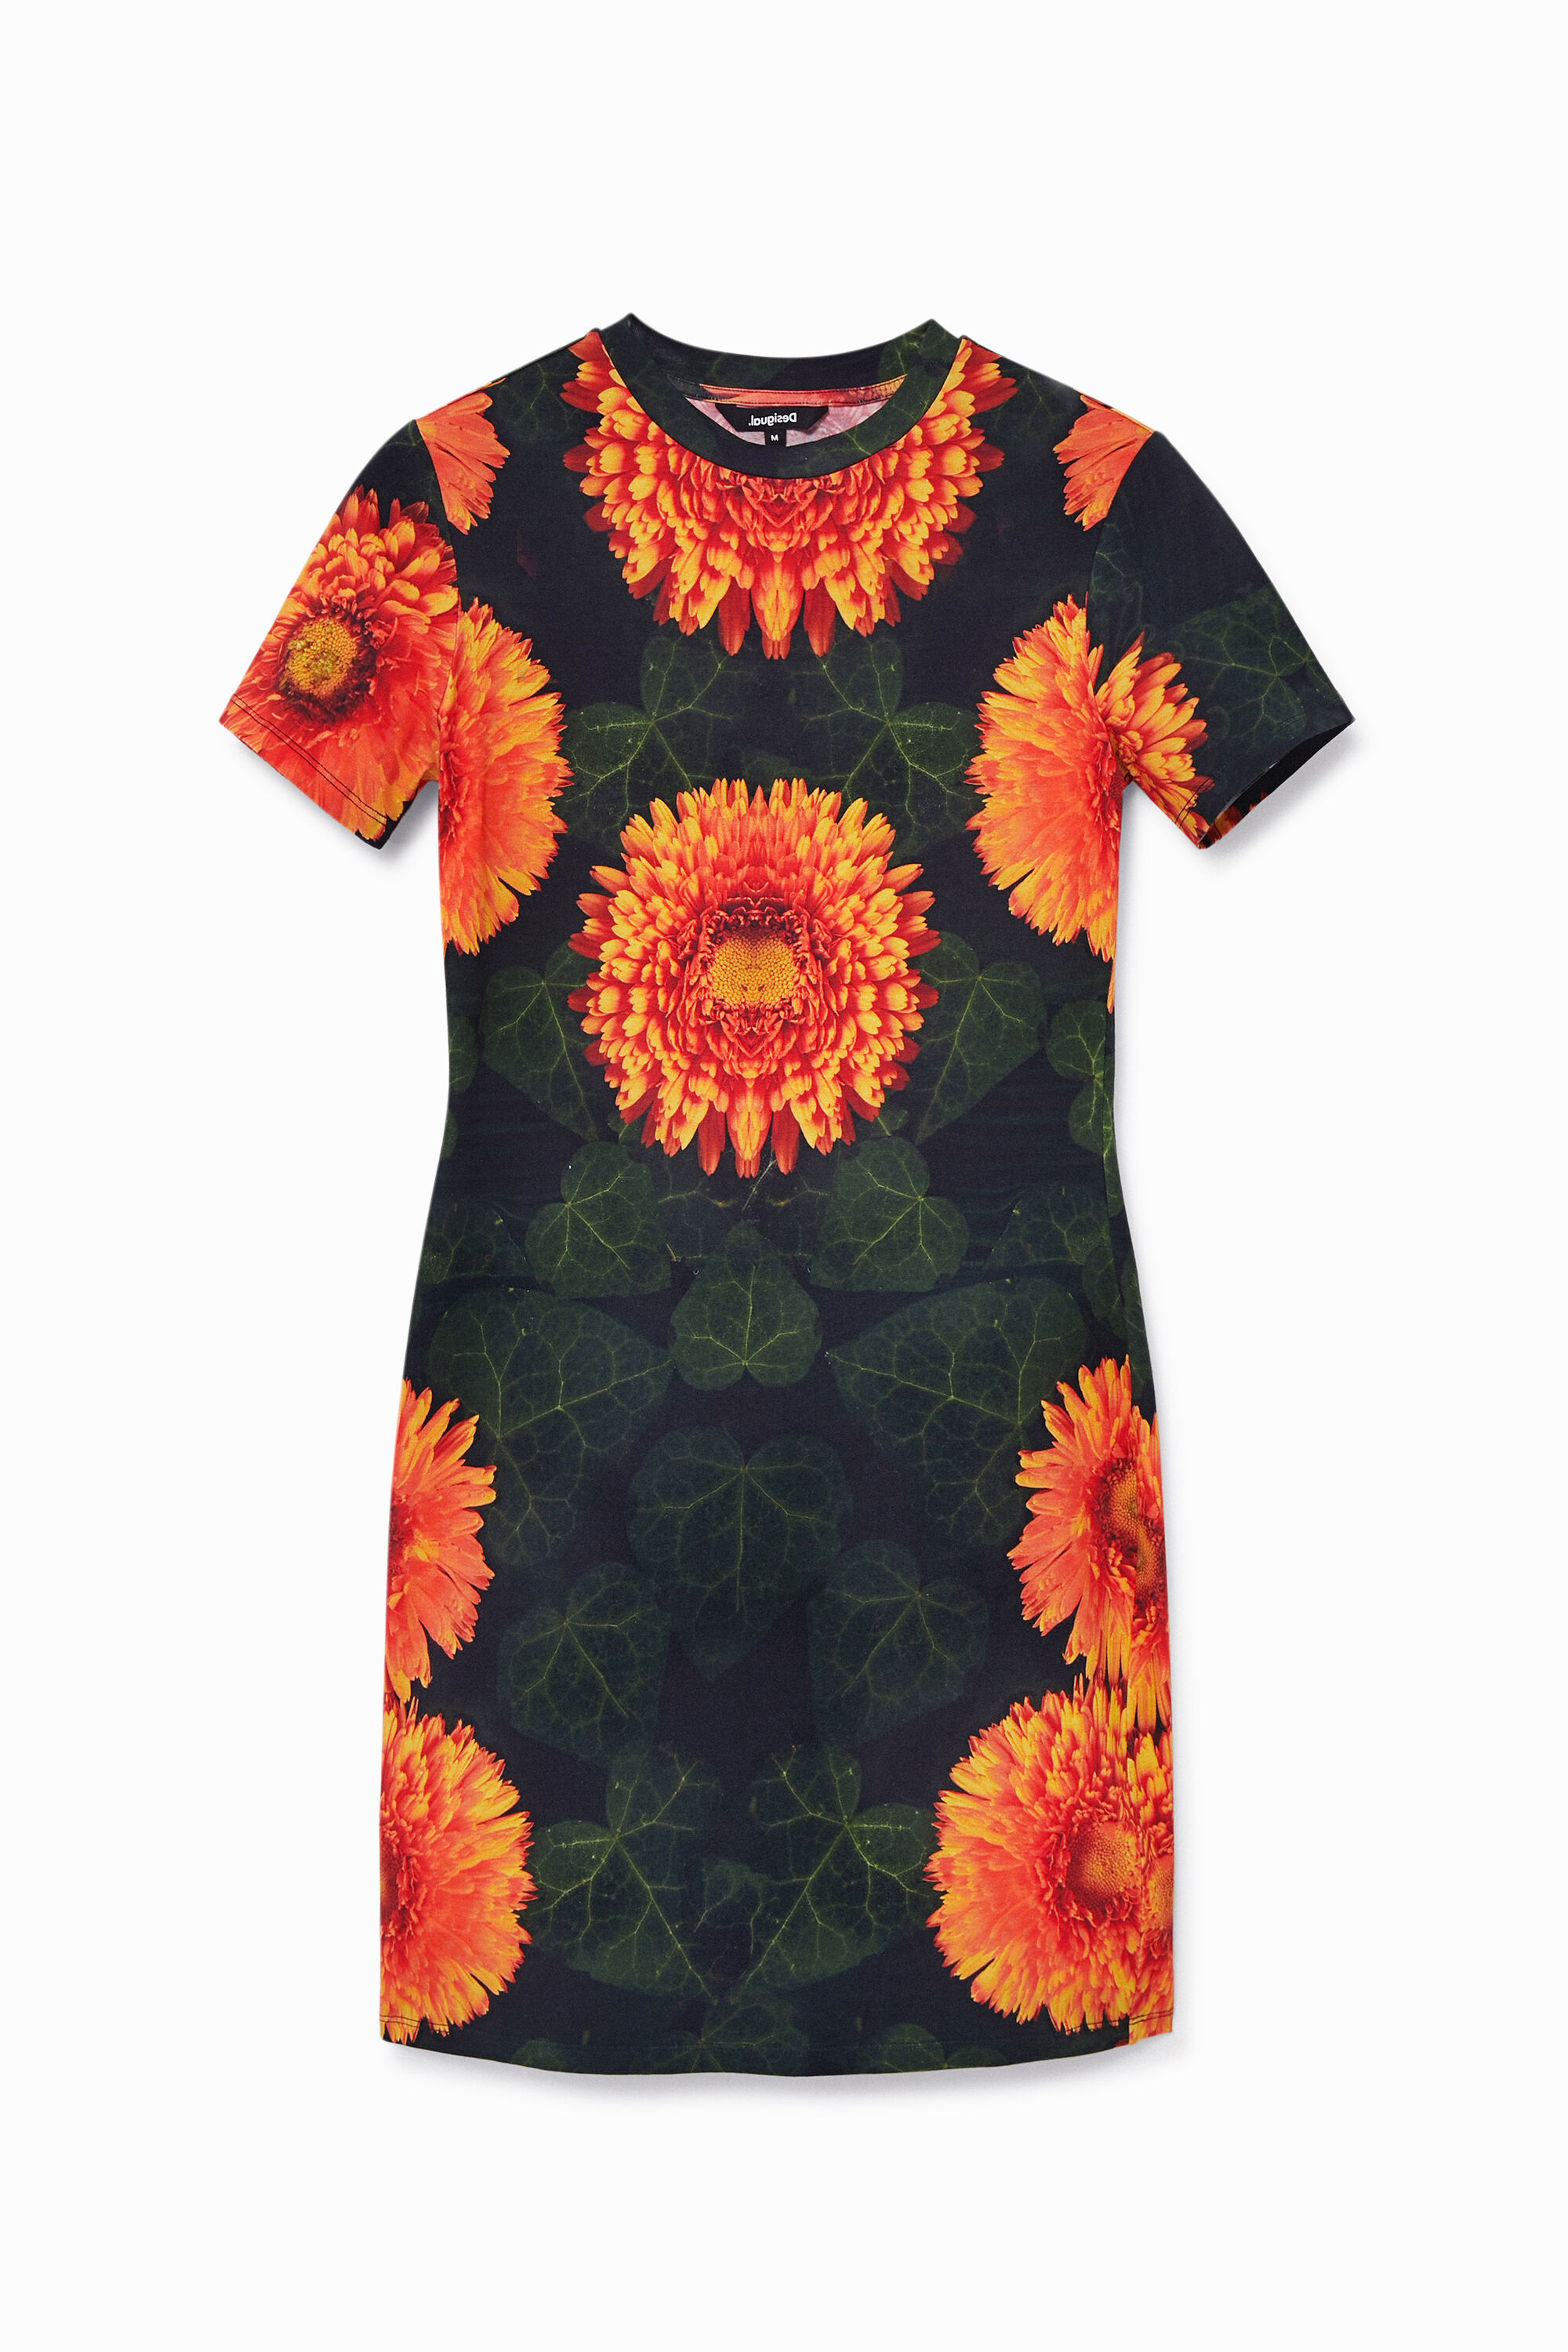 Desigual Floral T-shirt Dress In Orange